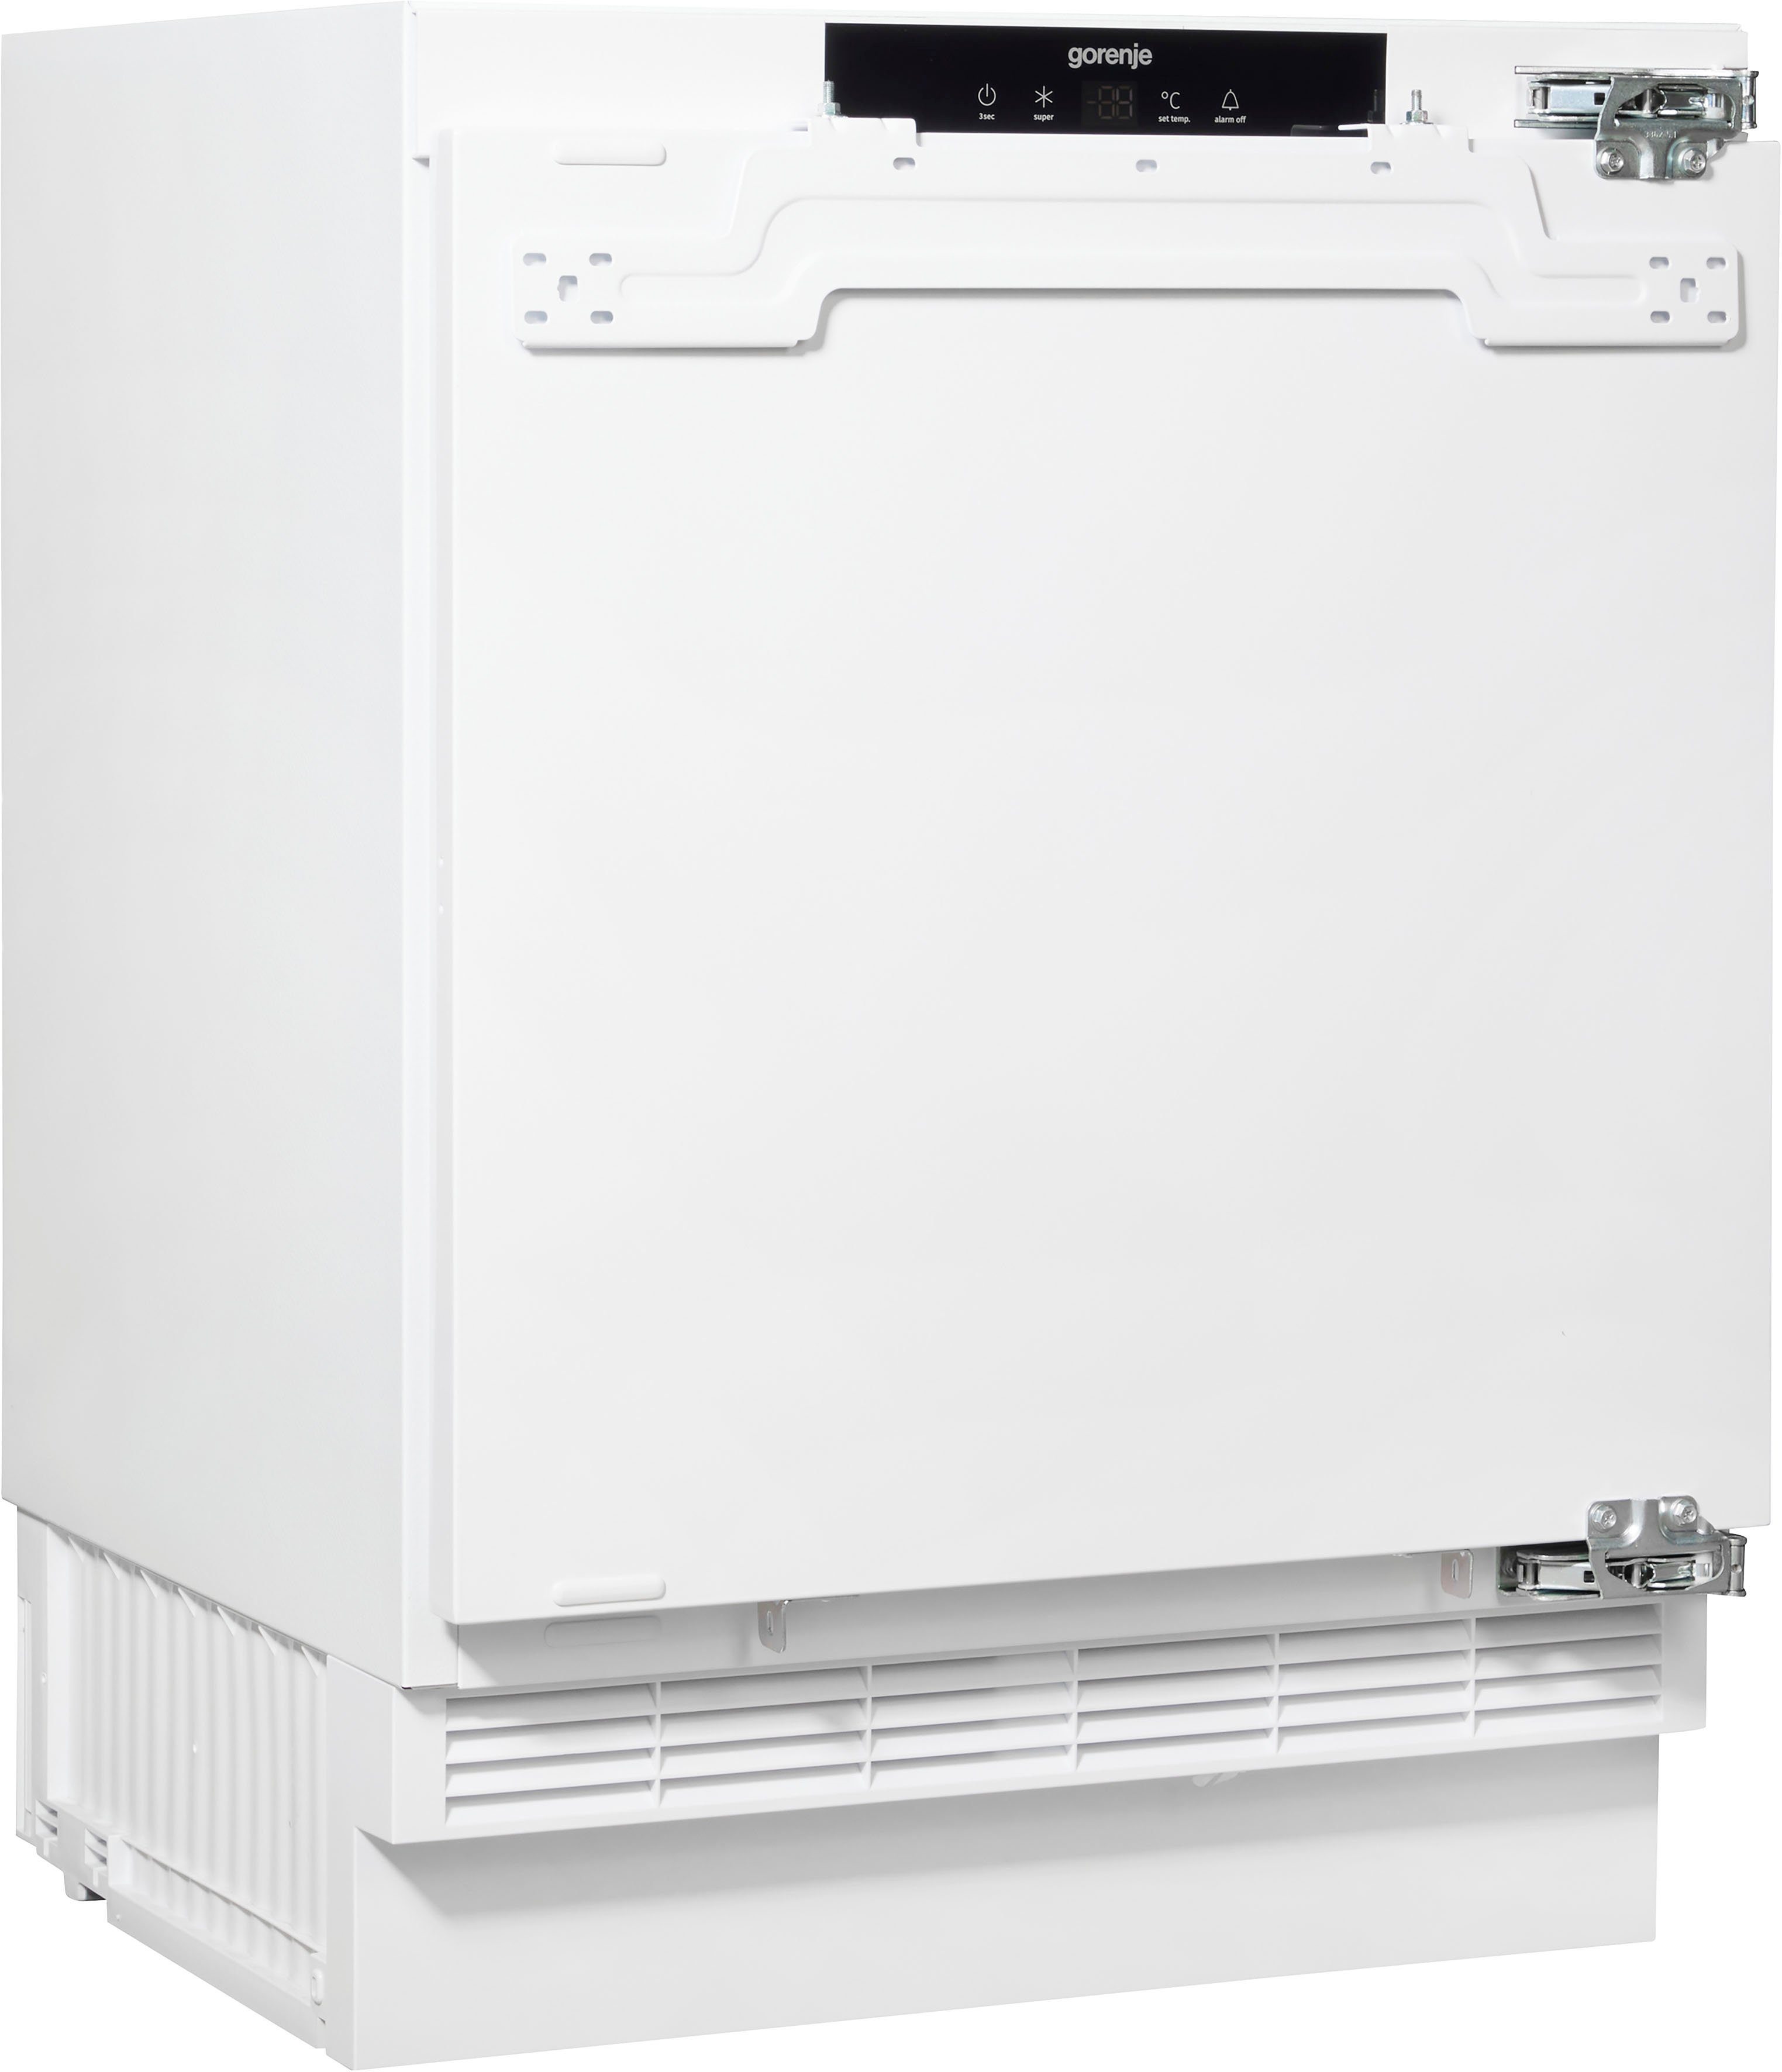 GORENJE Einbaukühlschrank RIU609EA1, 81,8 cm hoch, 59,5 cm breit,  Betriebsgeräusch: 39 dB